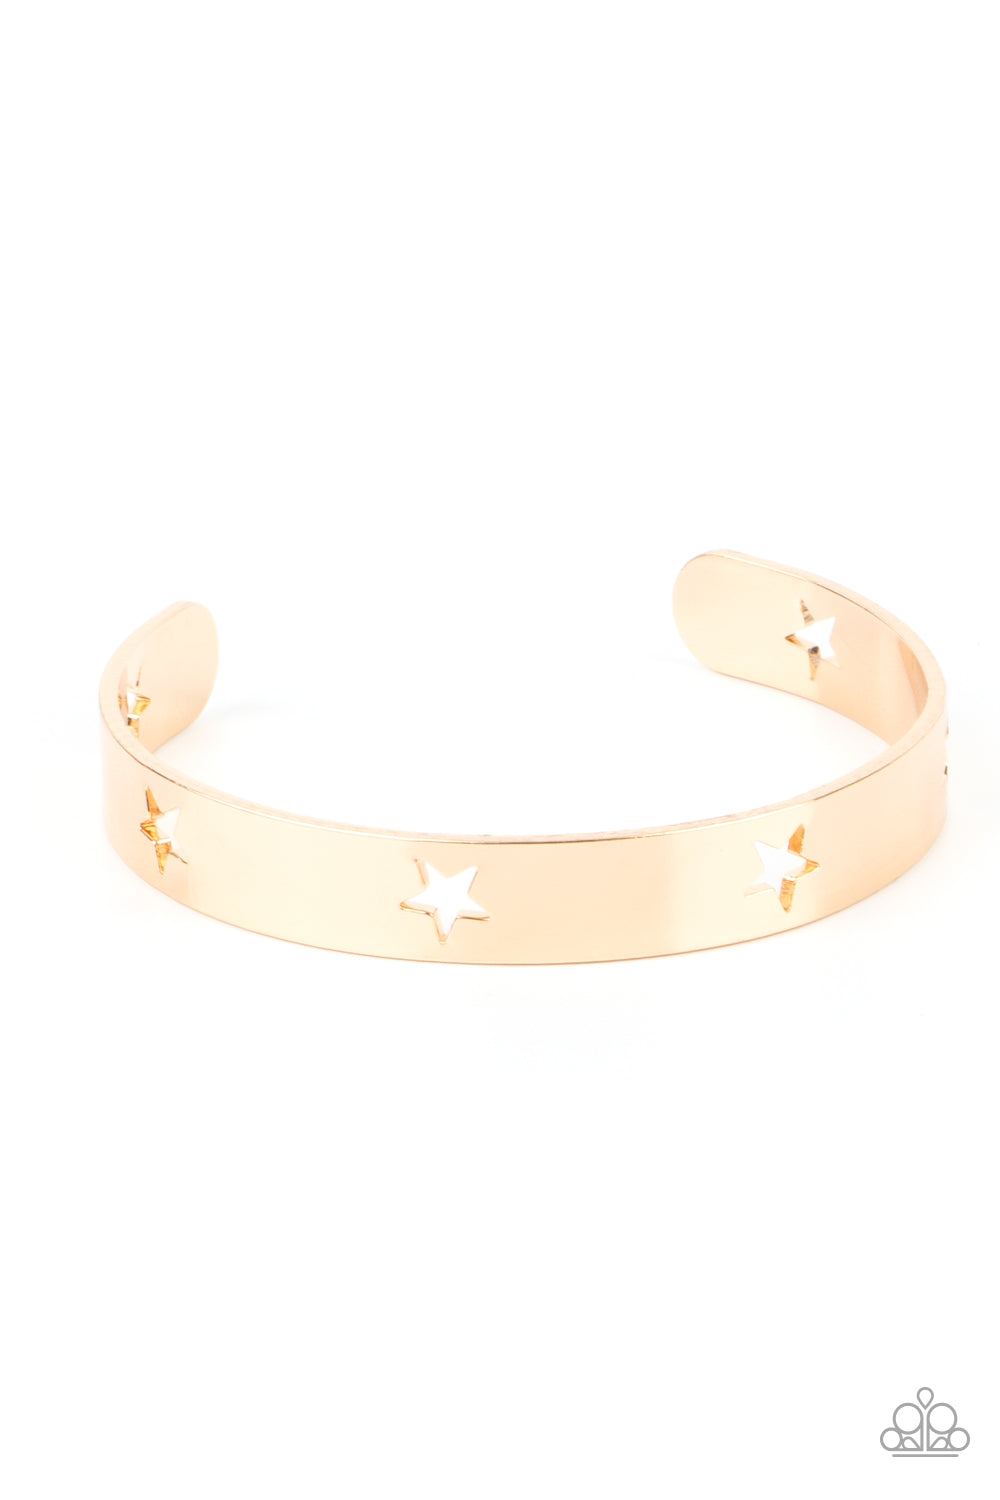 American Girl Glamour - Gold cuff bracelet 763